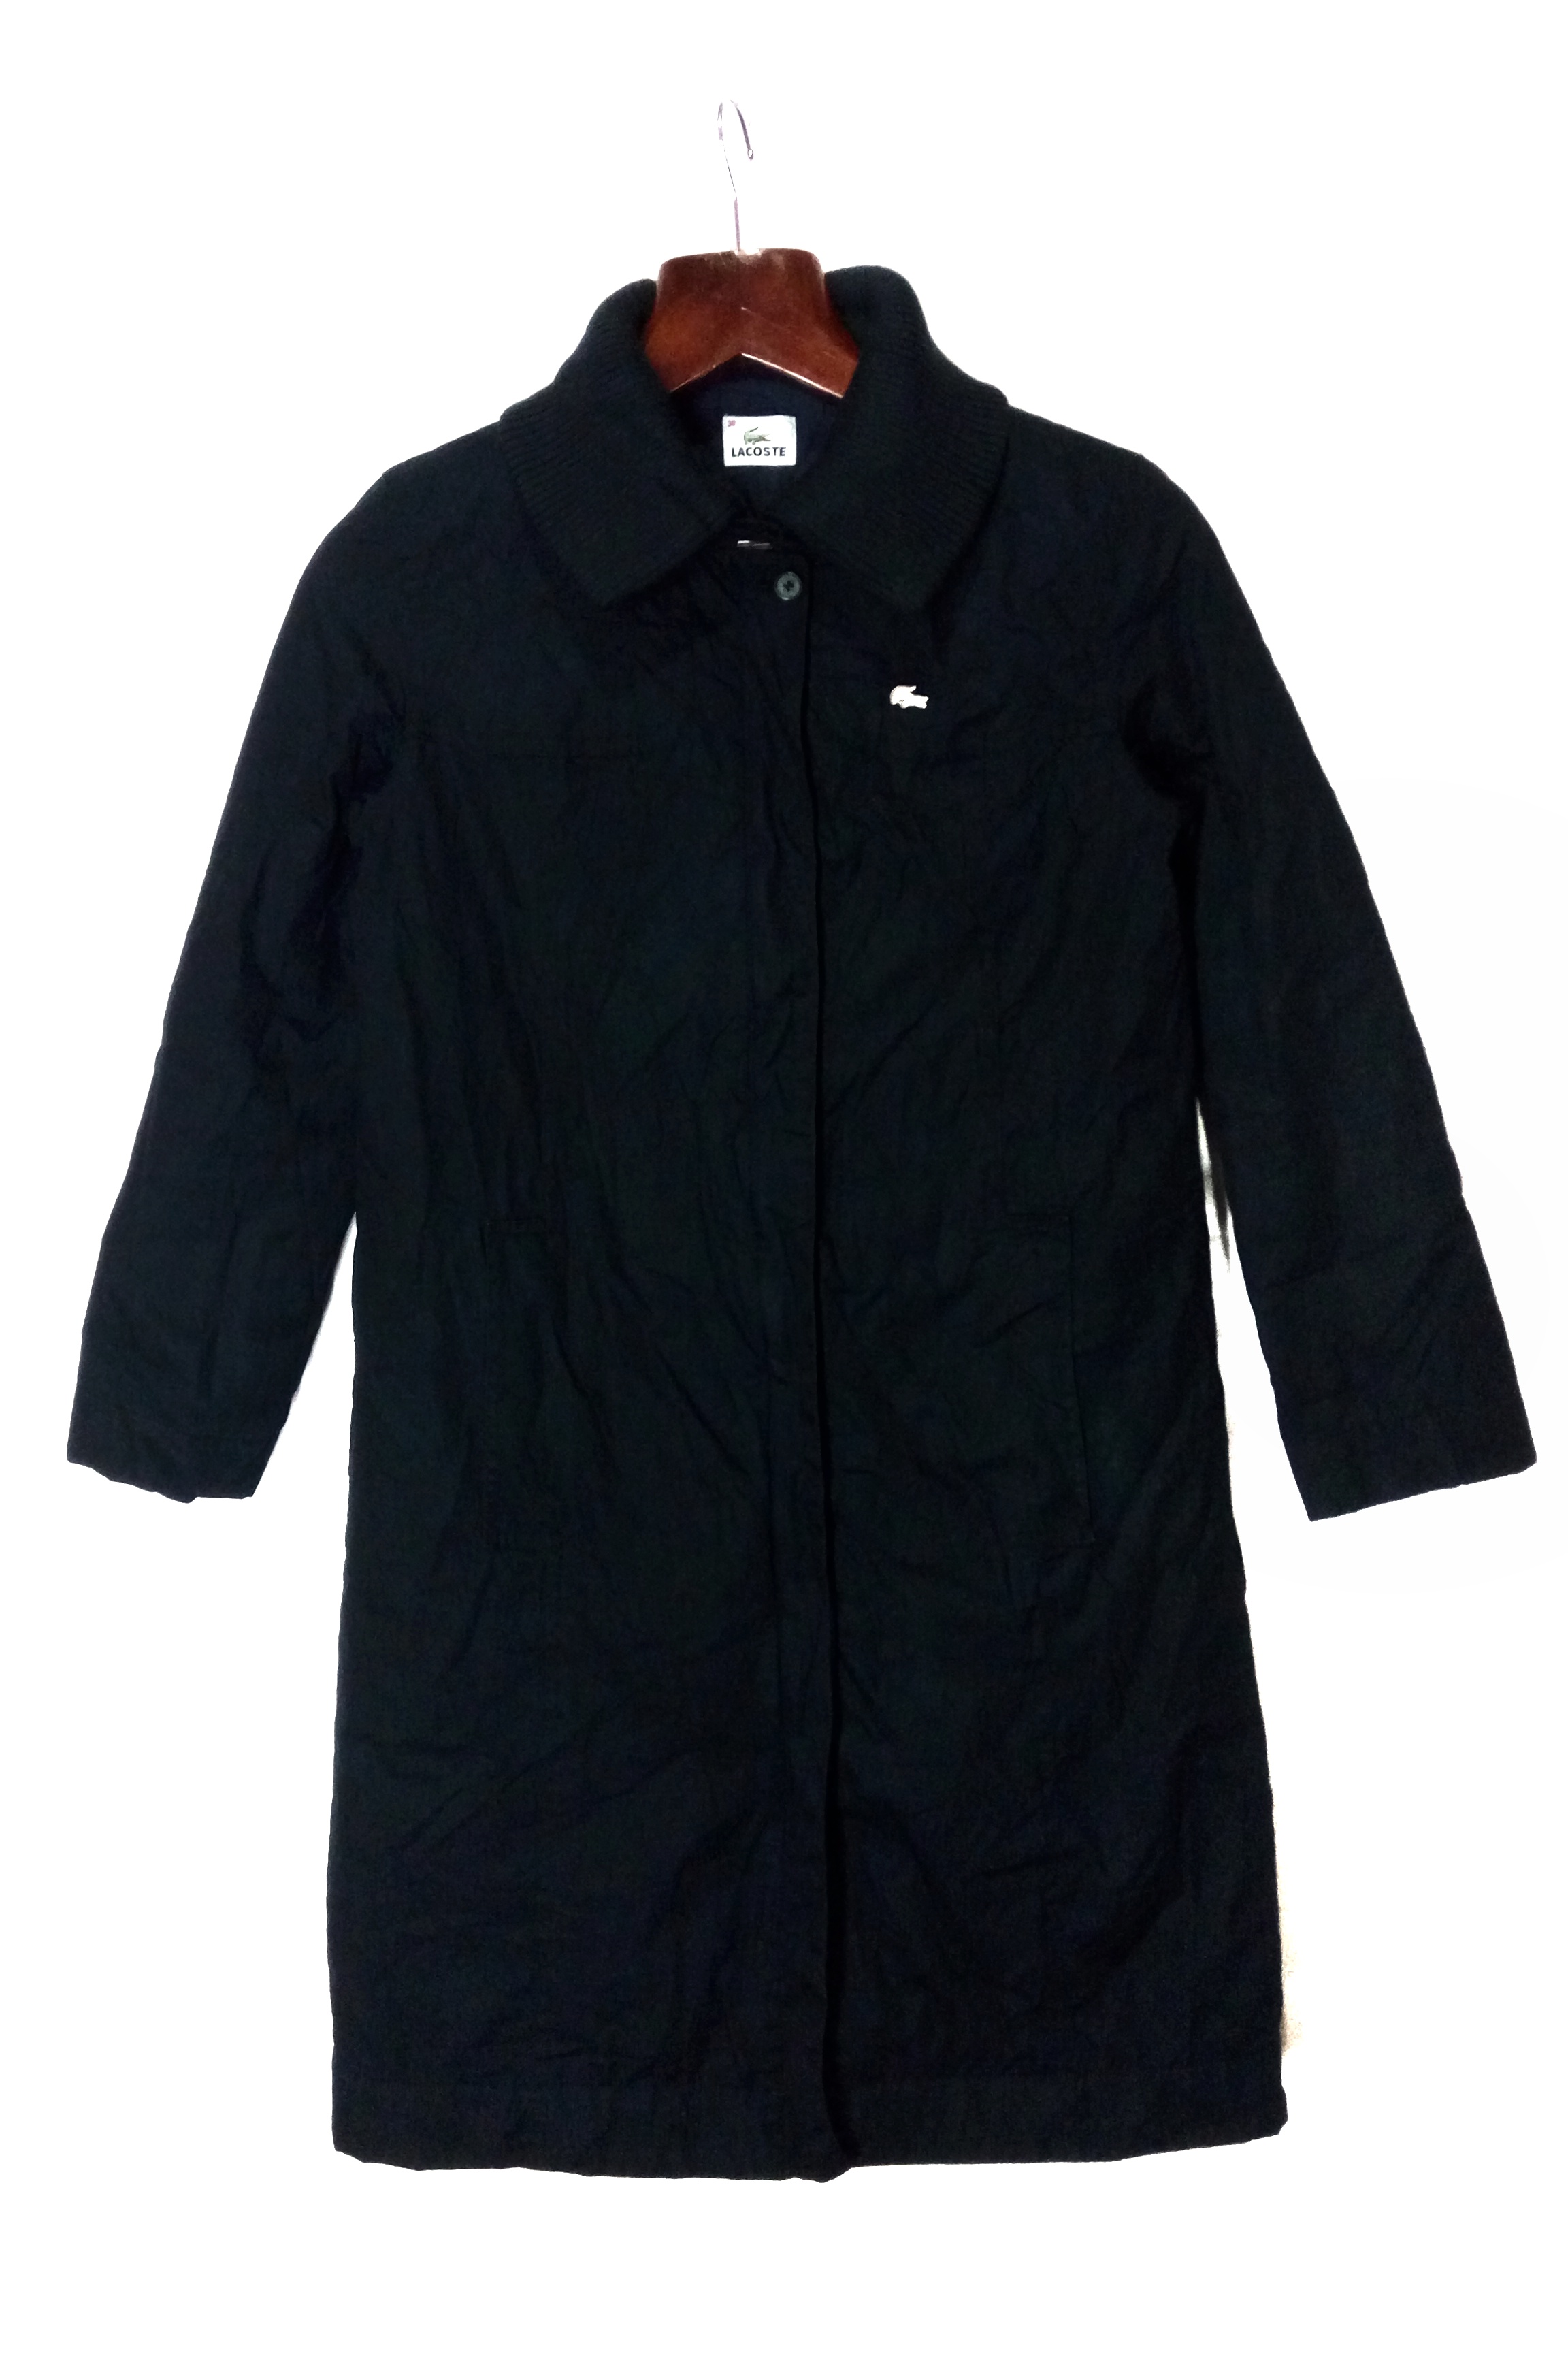 Lacoste parka long jacket dark blue color - 1